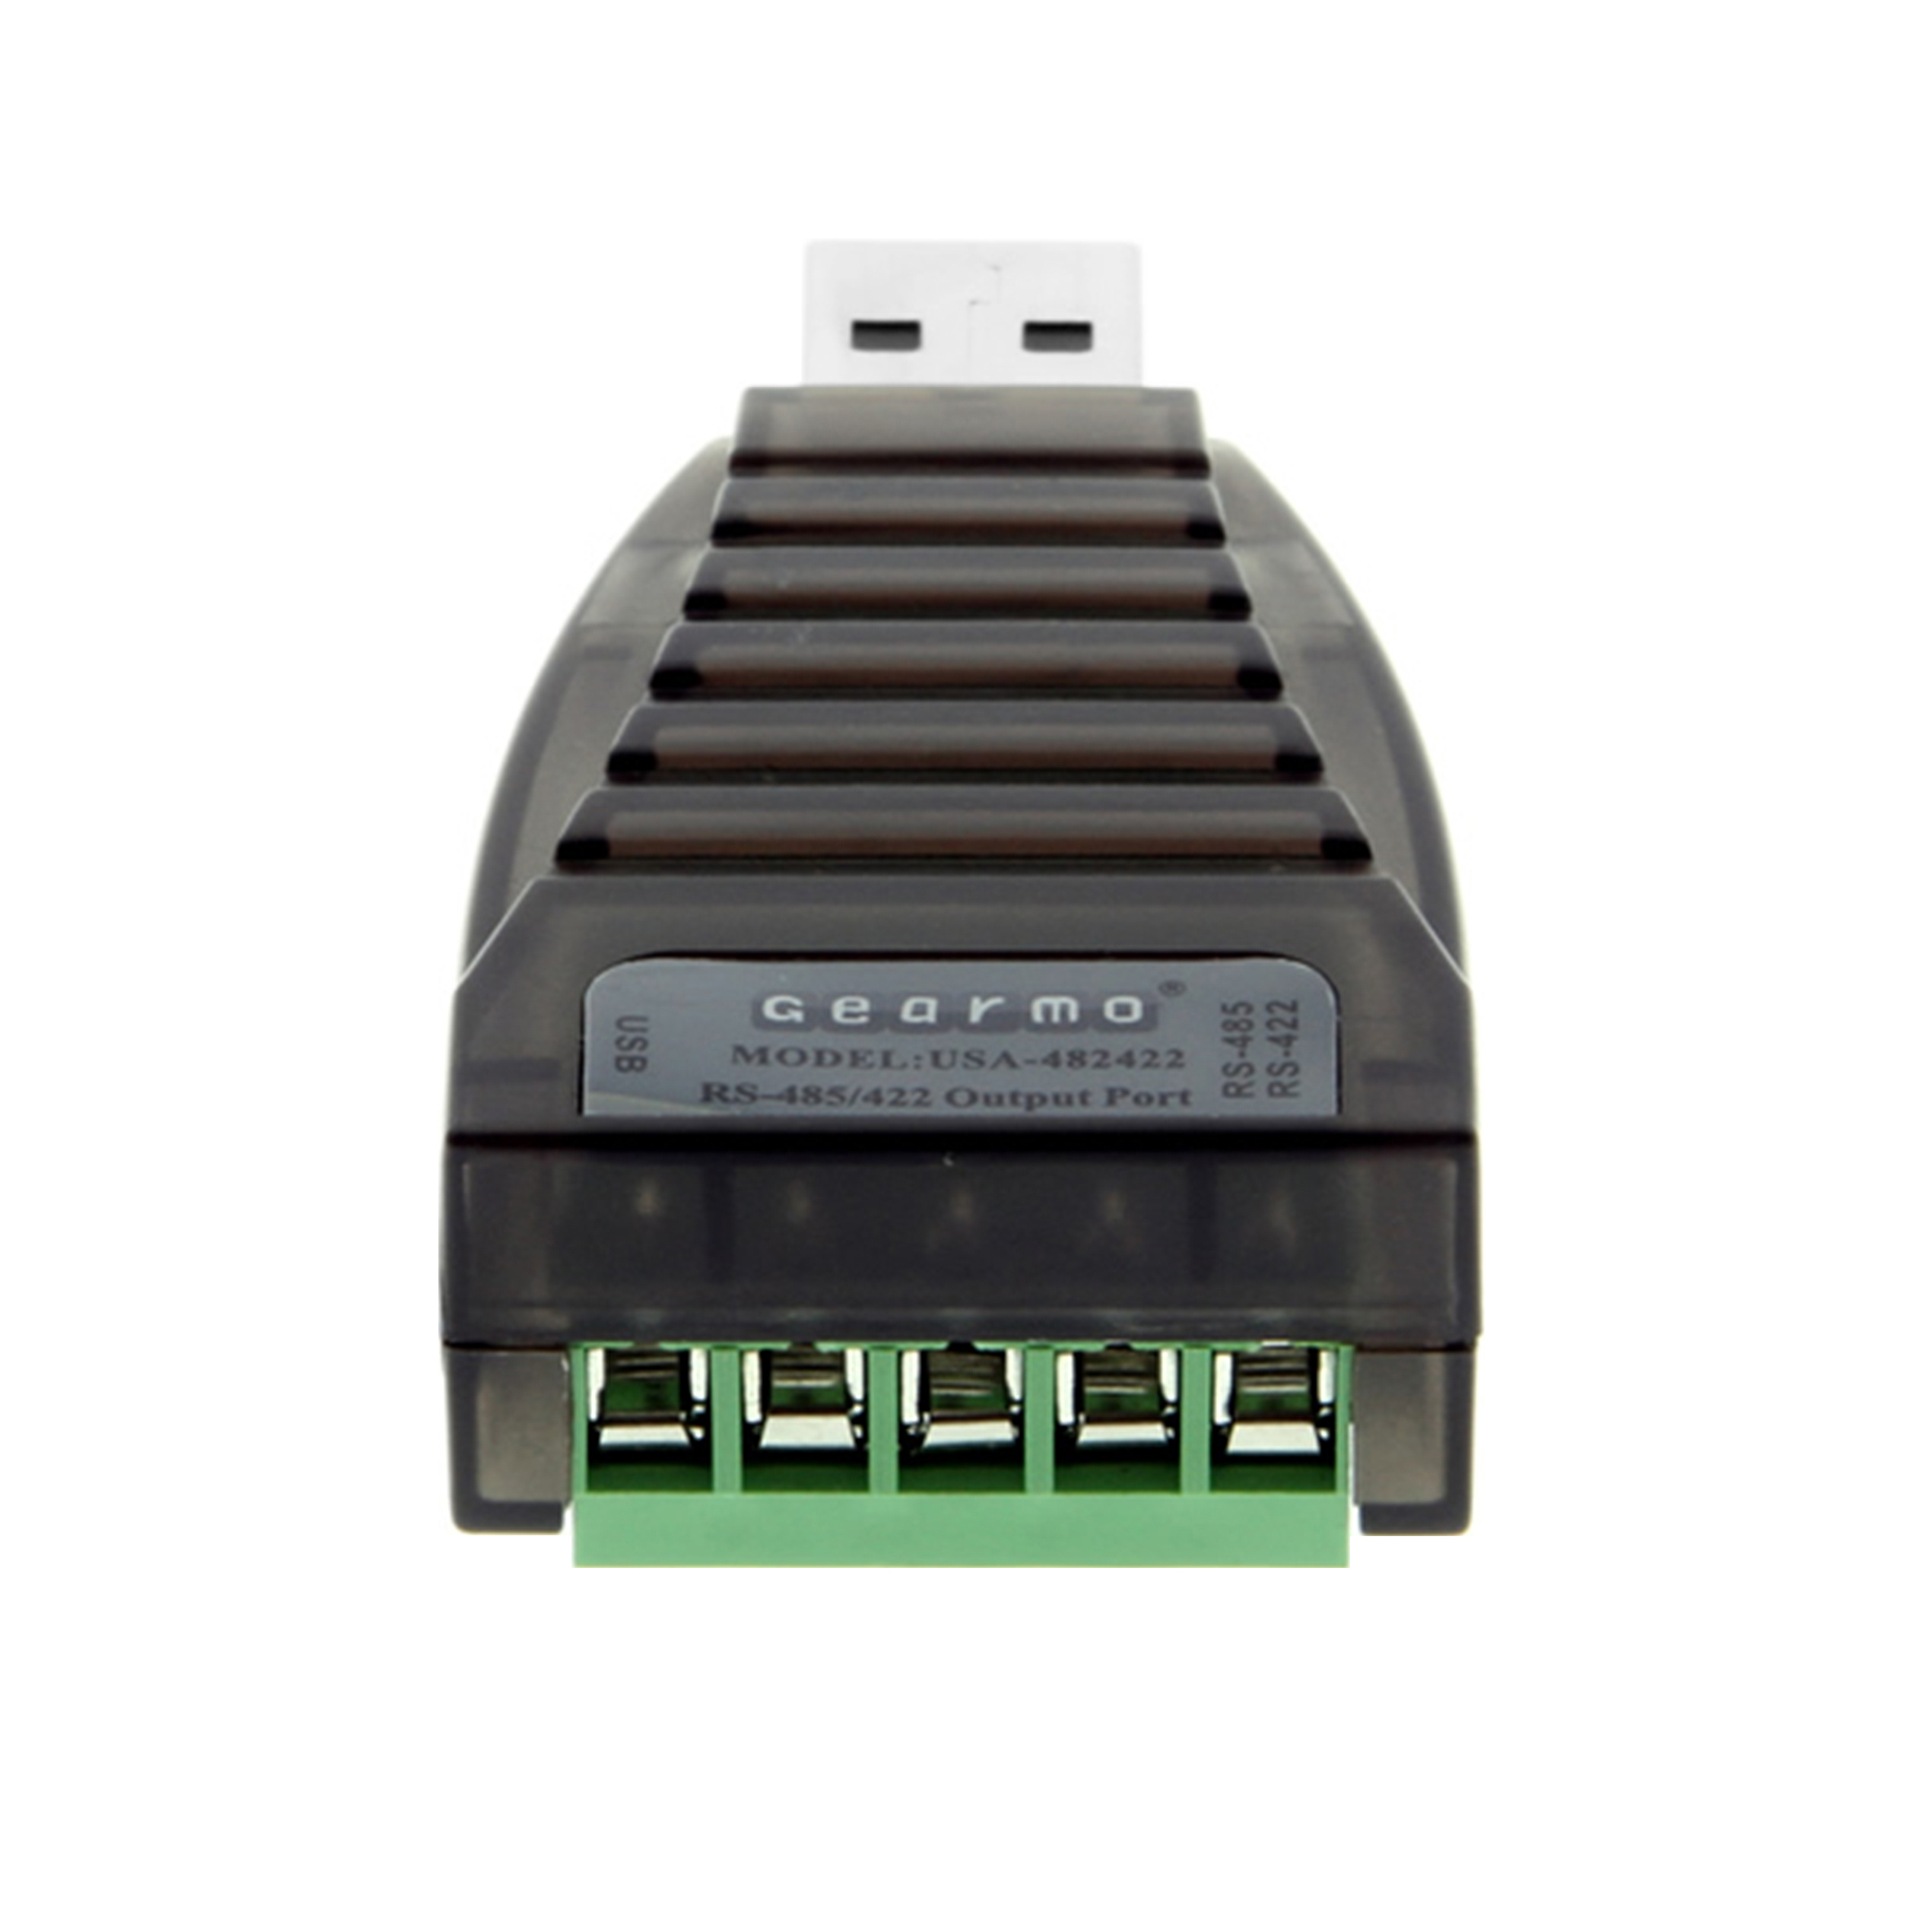 AC-422 Modbus to USB Converter